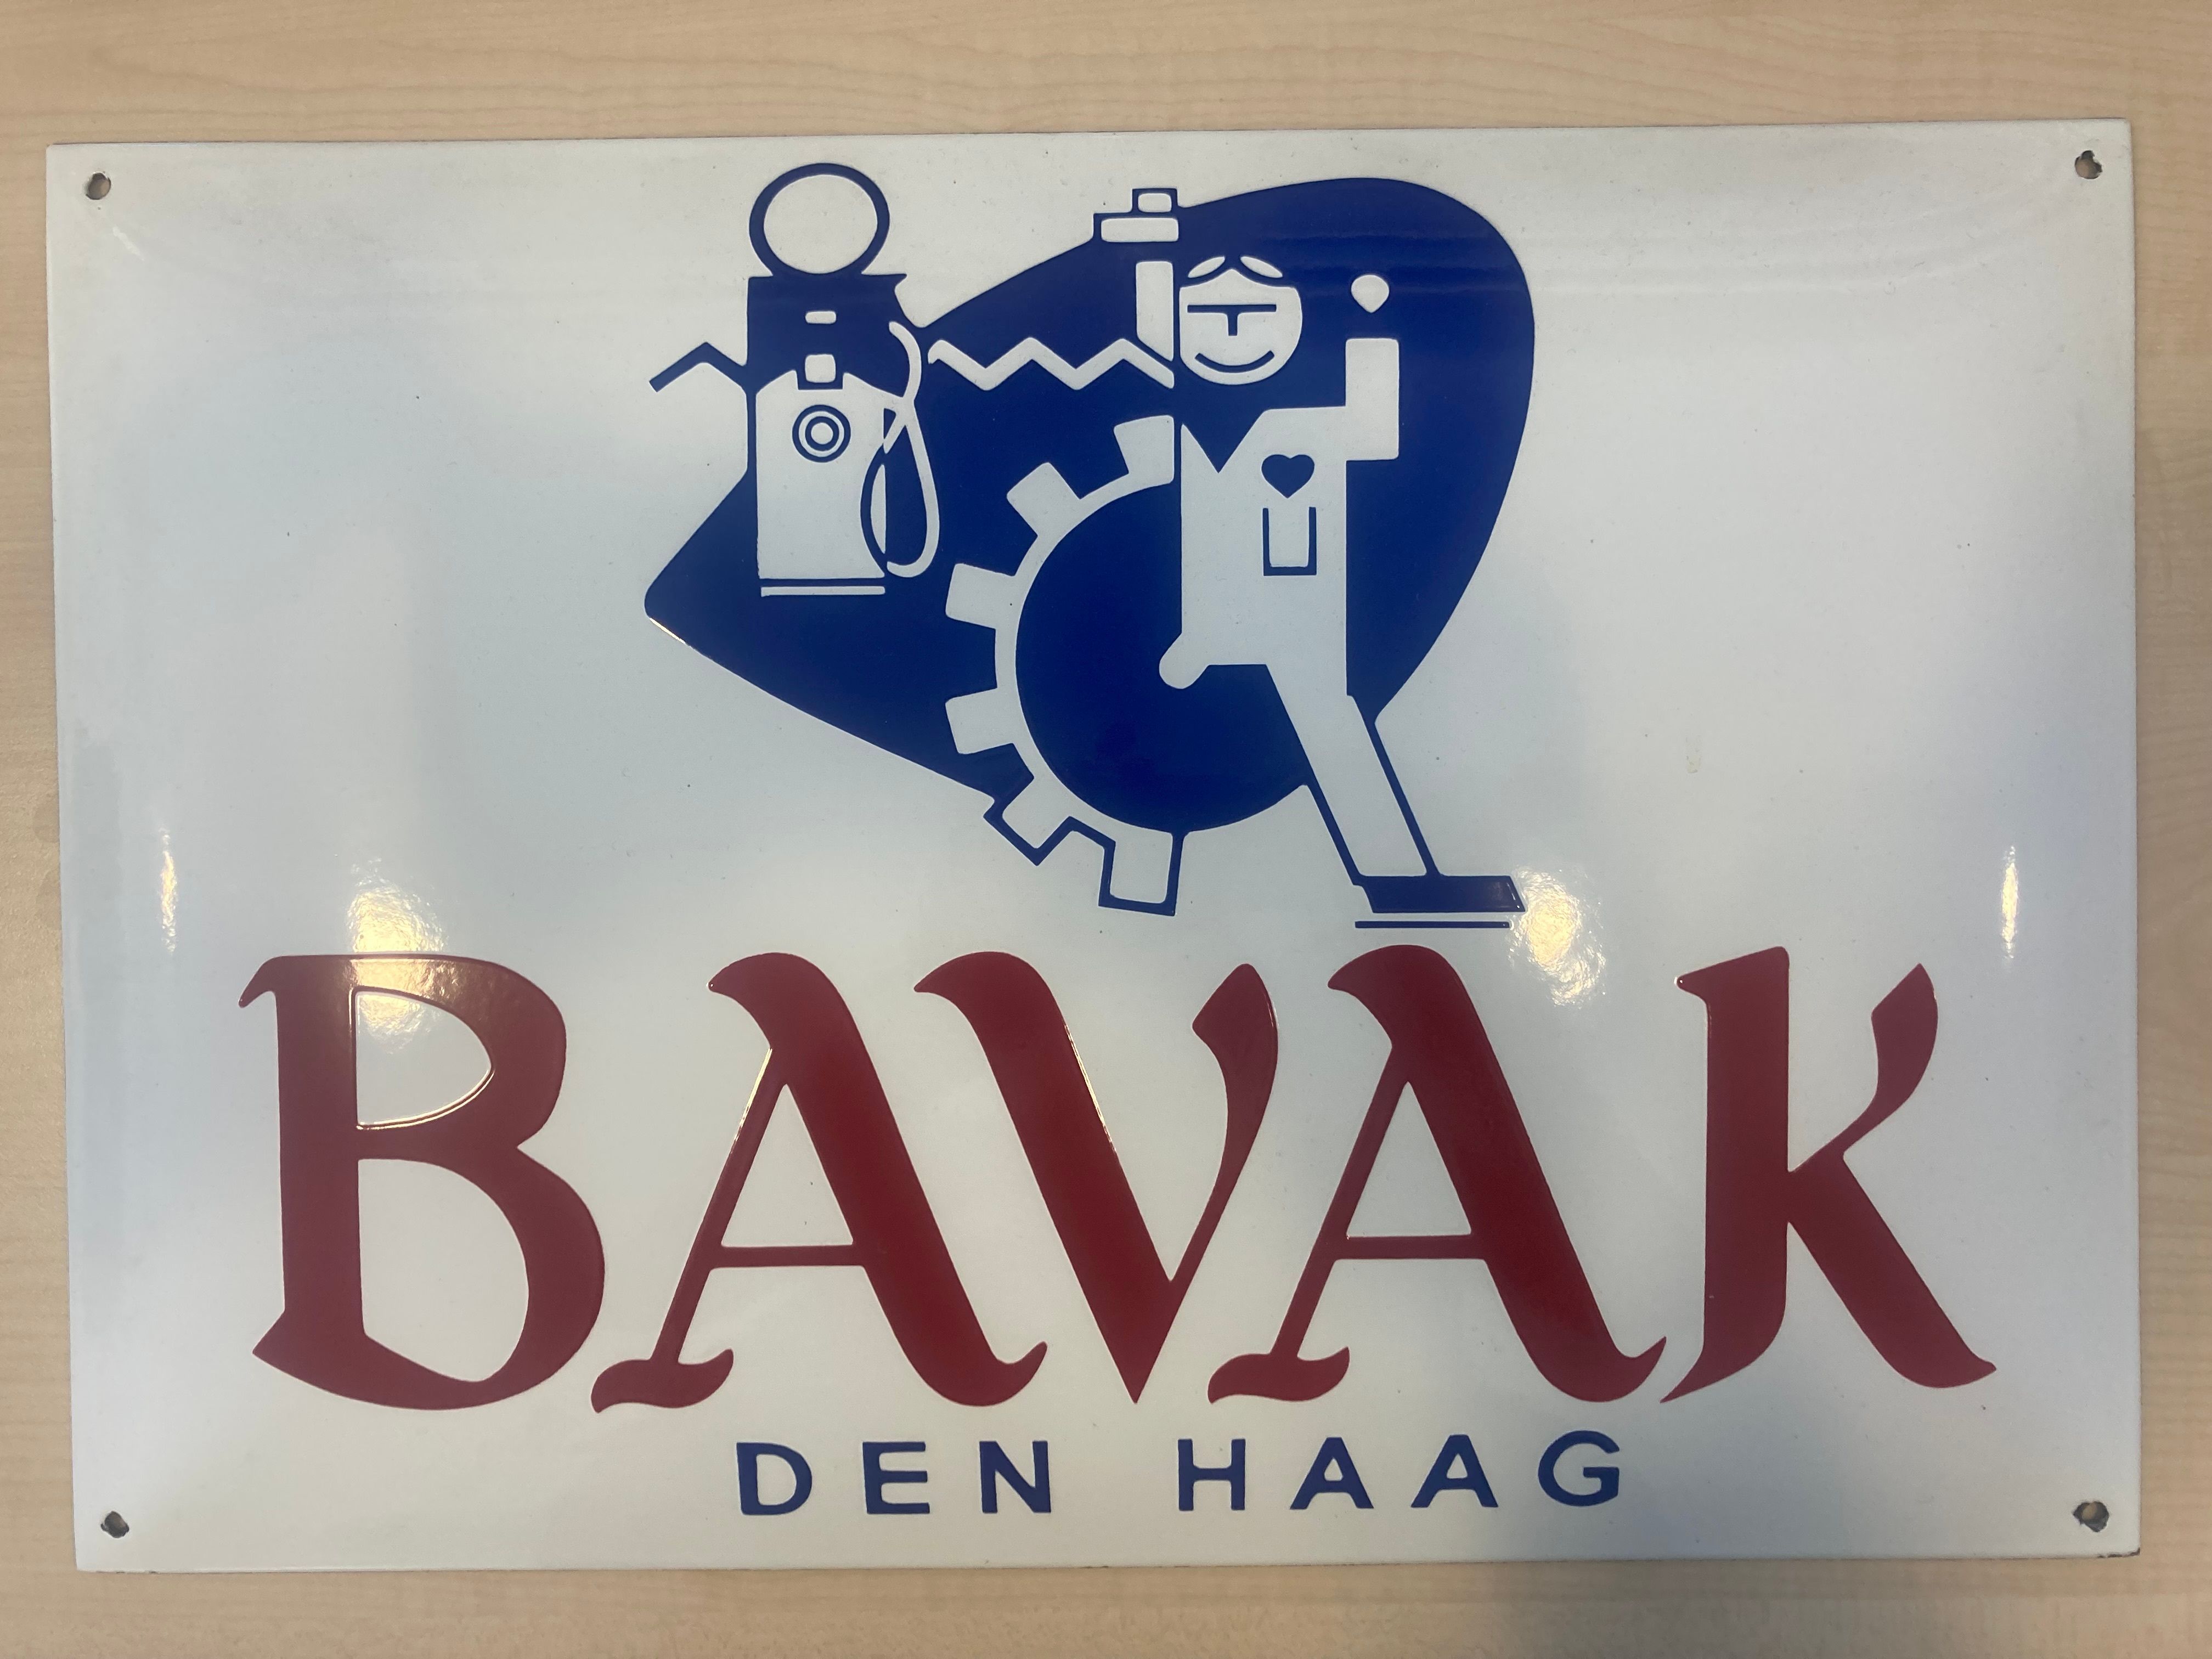 Bavak_start_logo.jpg